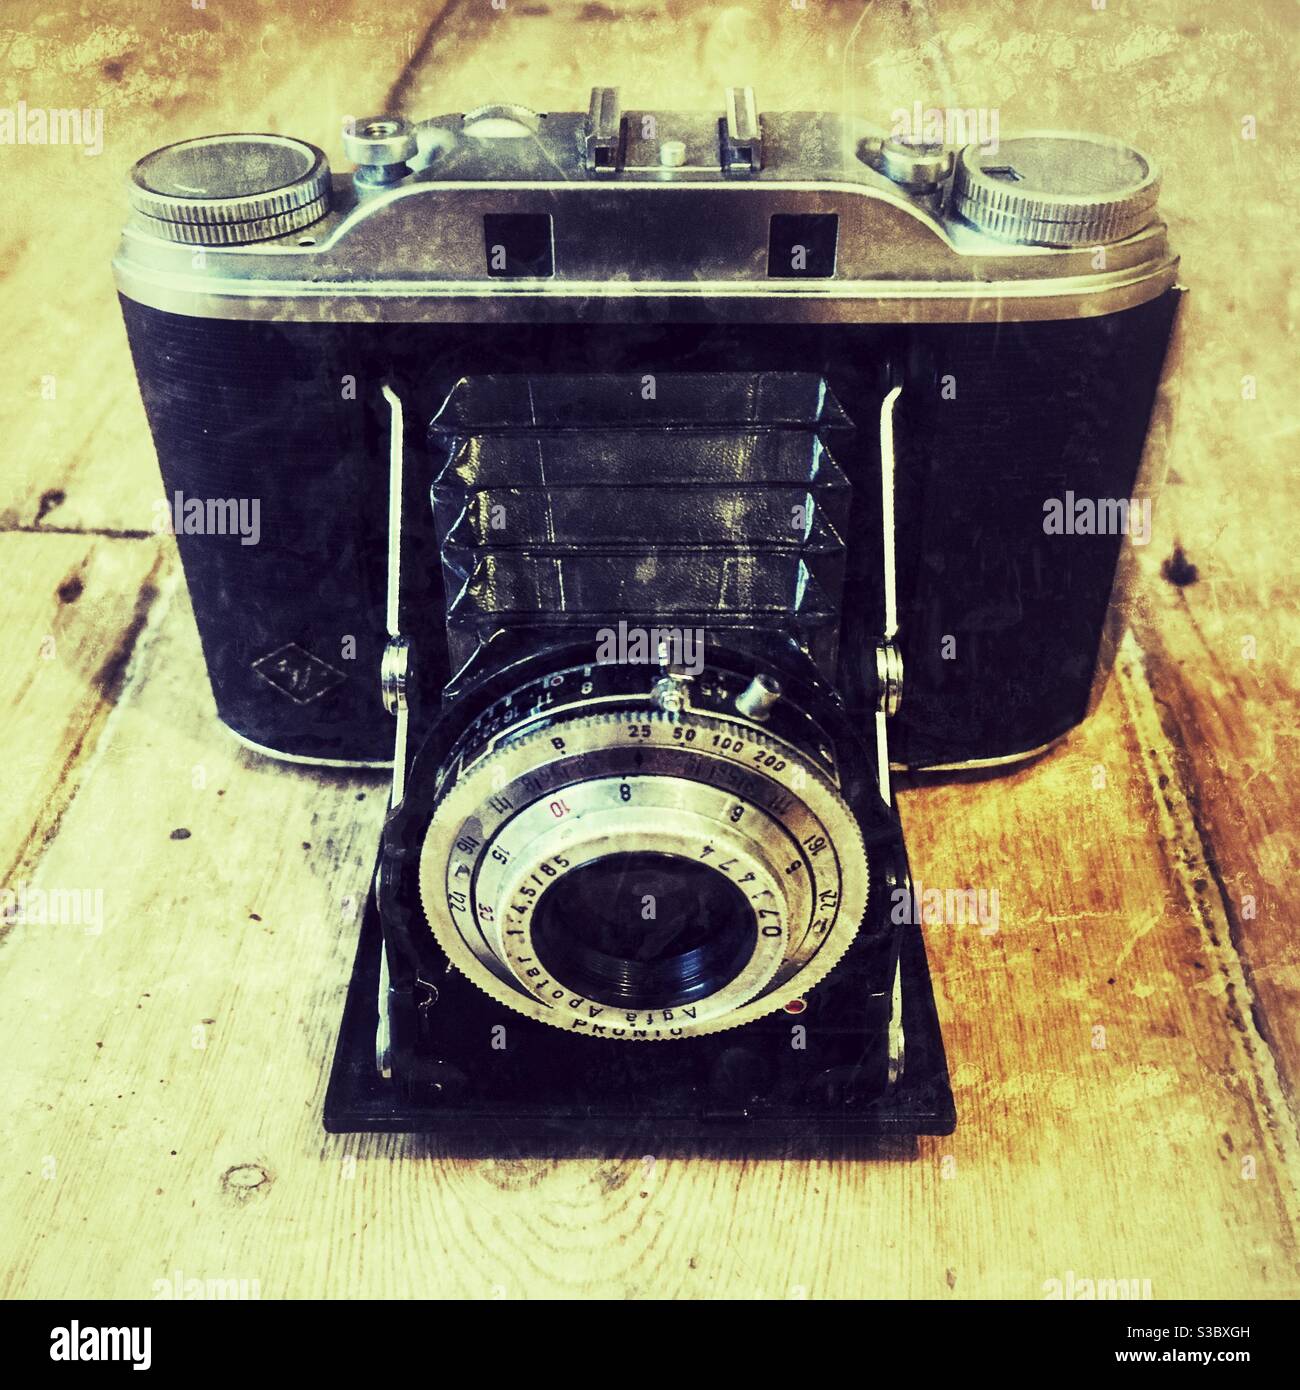 Agfa isolette III analogue 120 film camera. Stock Photo